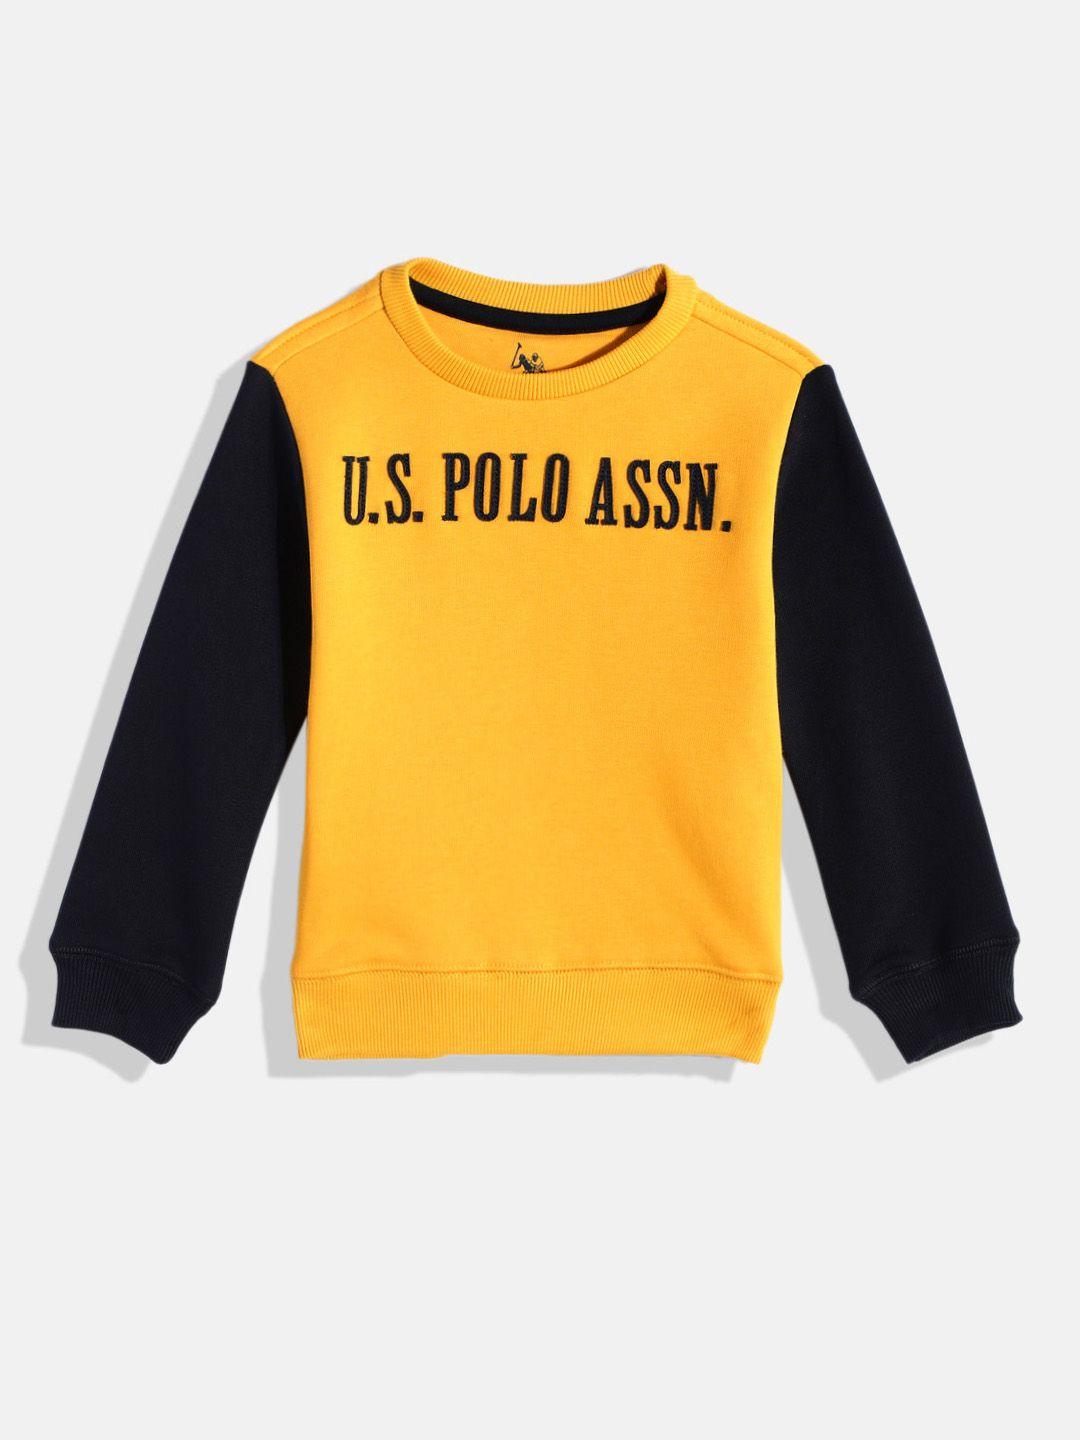 u.s. polo assn. kids boys colourblocked sweatshirt